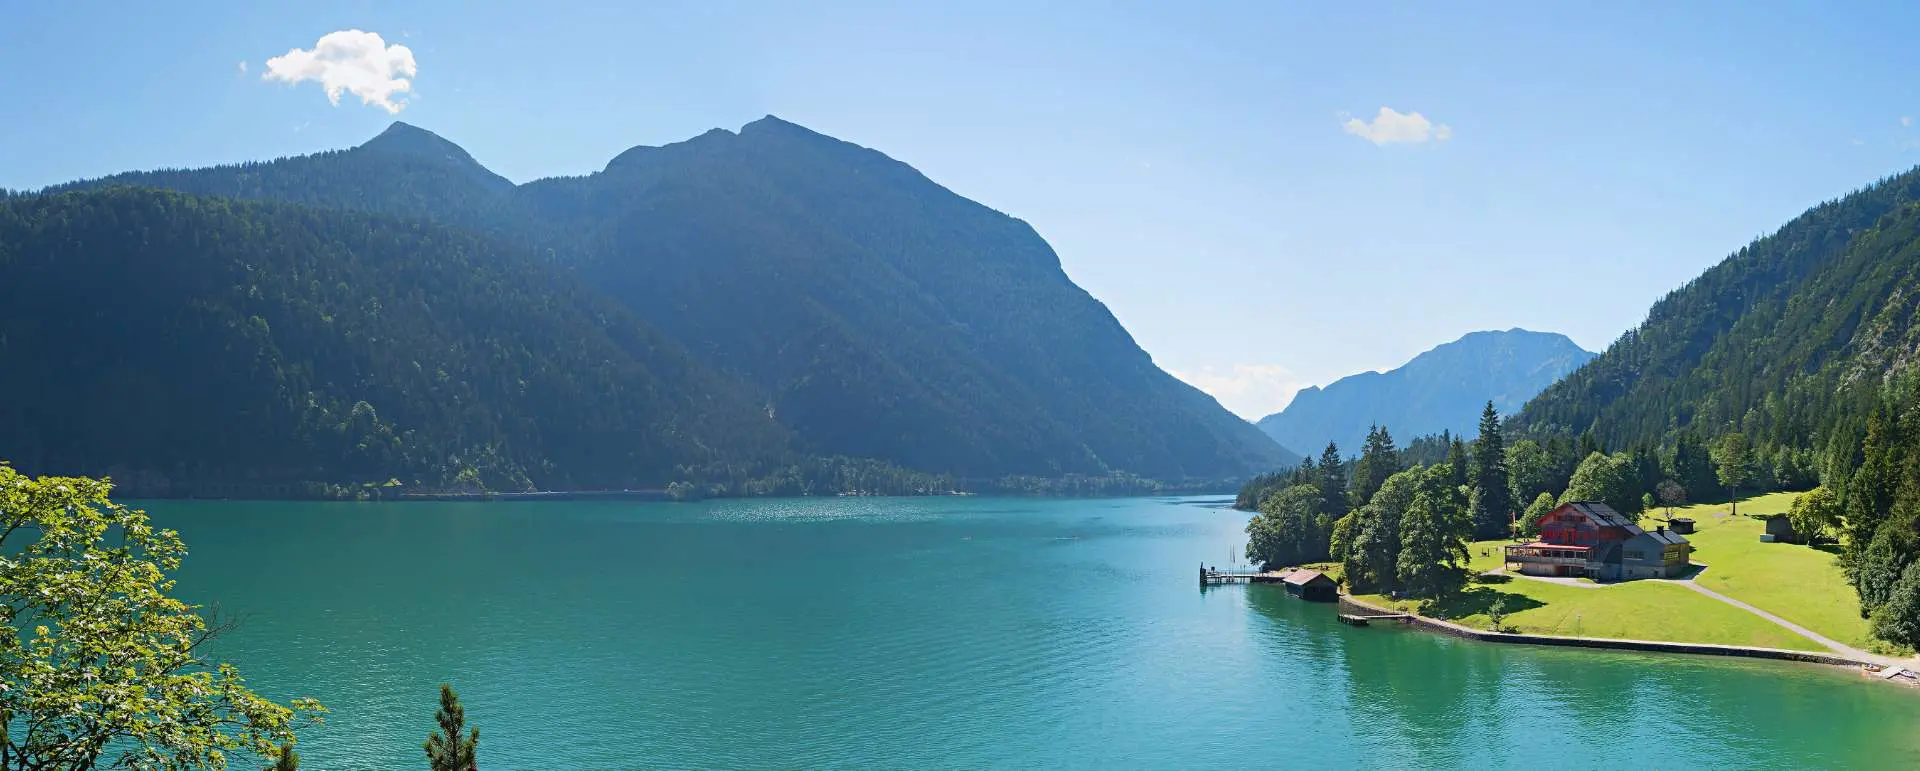 Achen Lake - the destination for groups